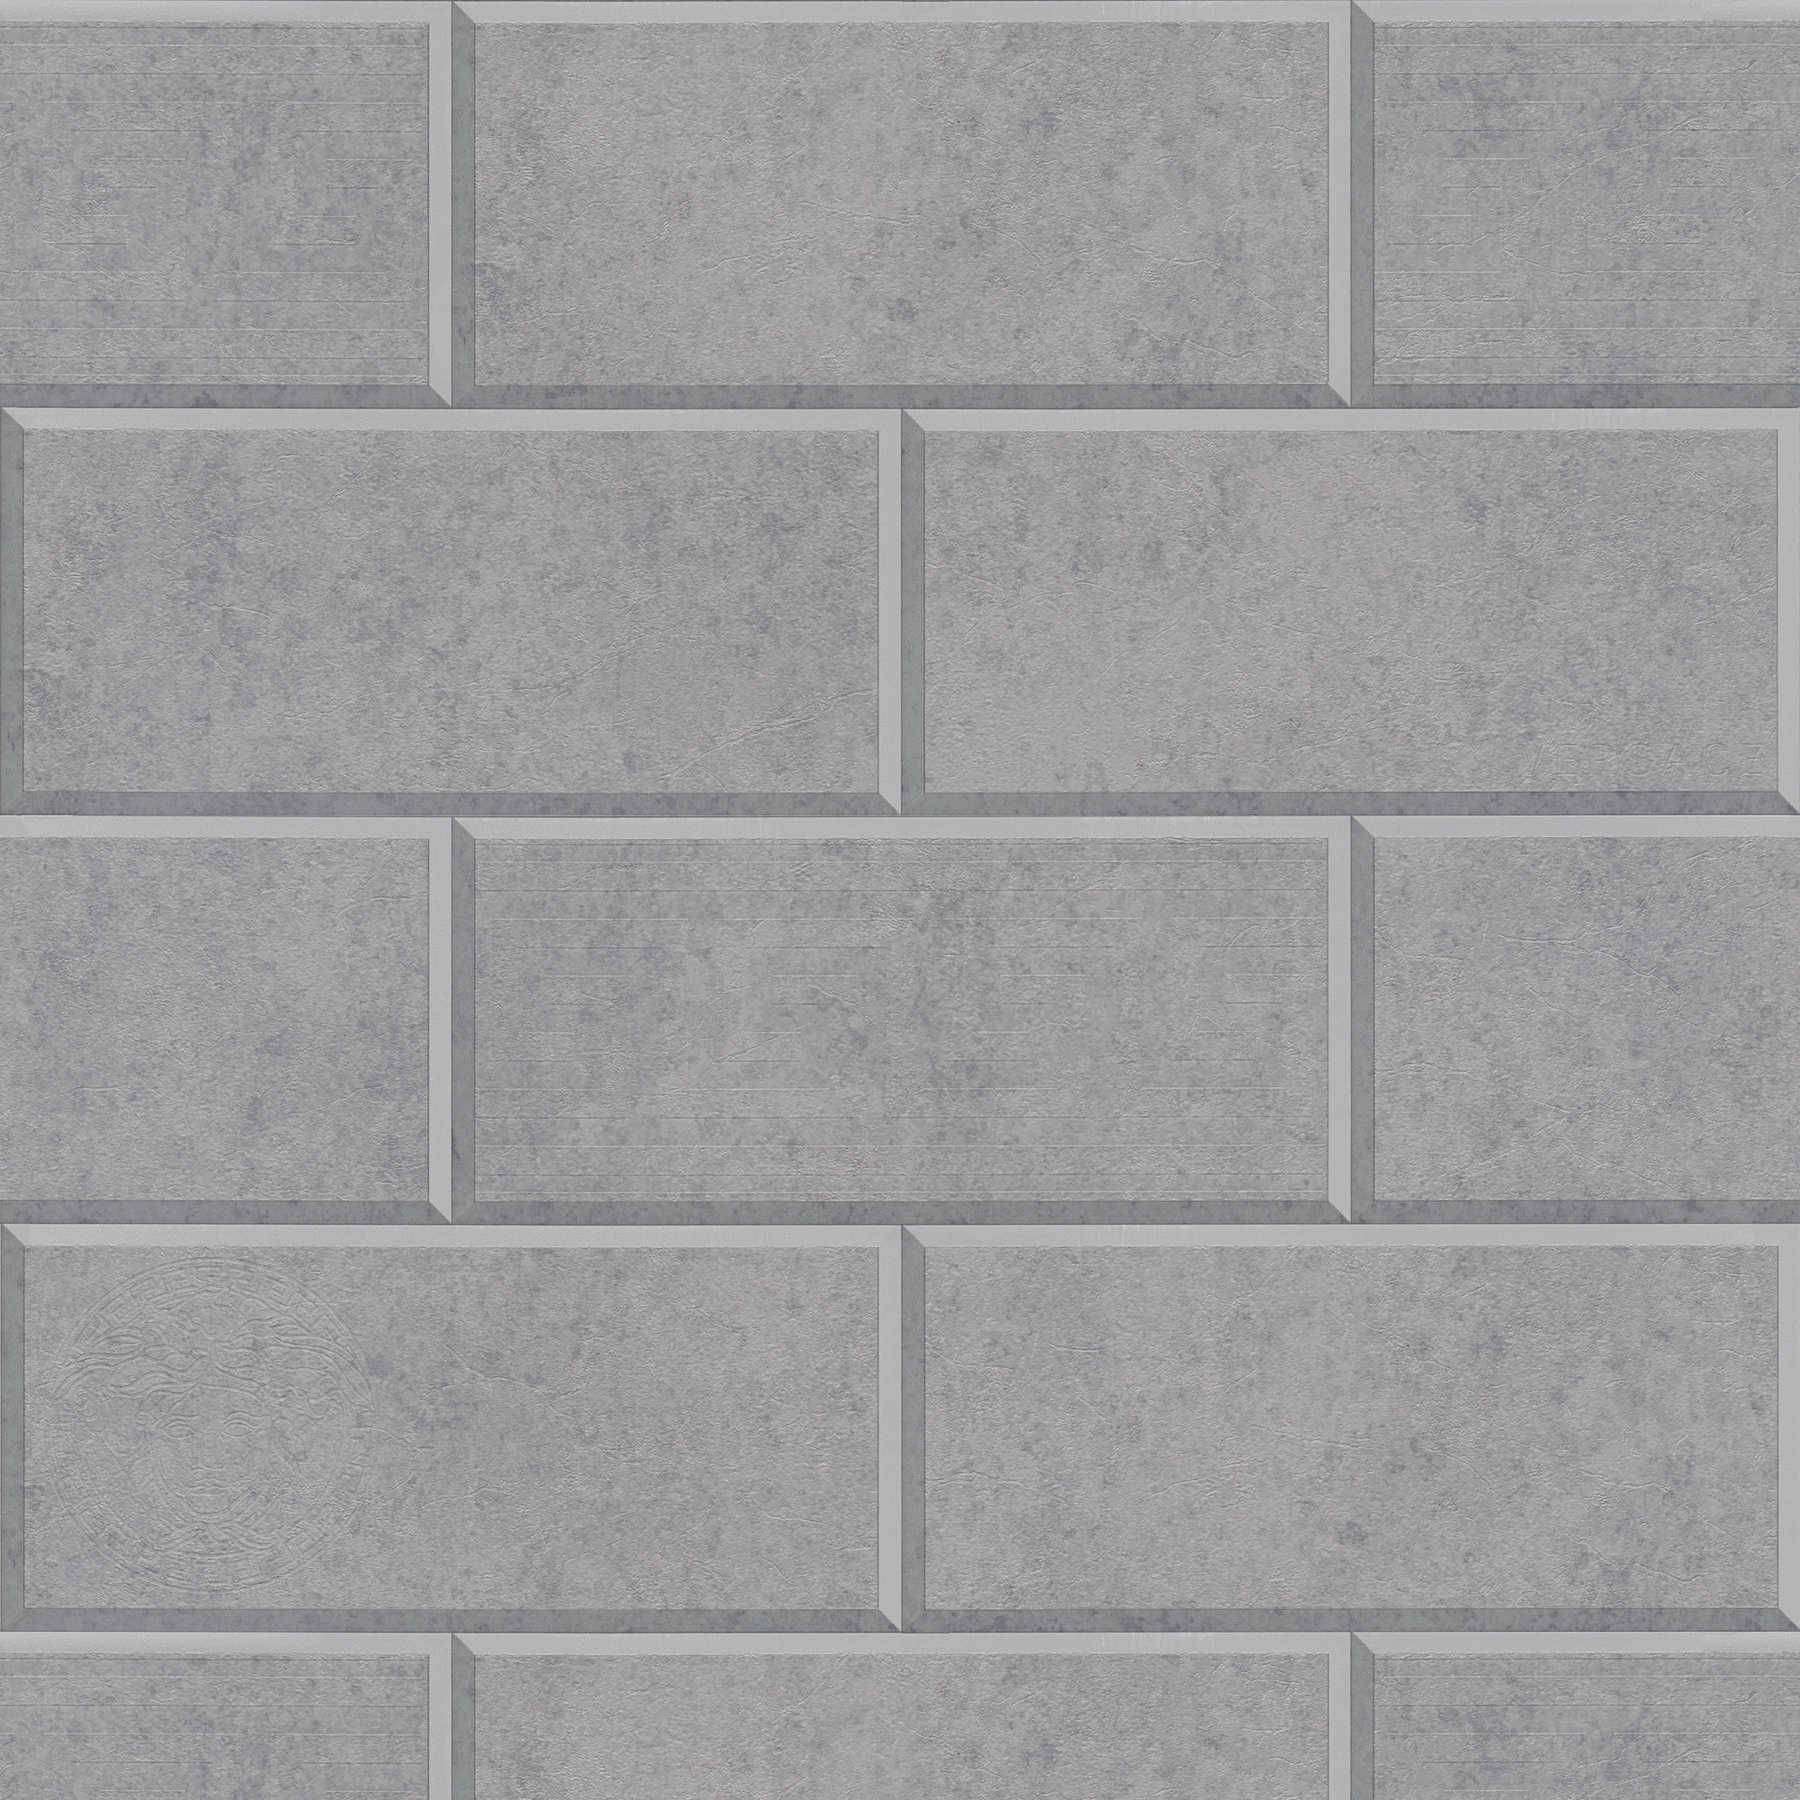 Wallpaper 3D stone wall design with concrete blocks - grey
